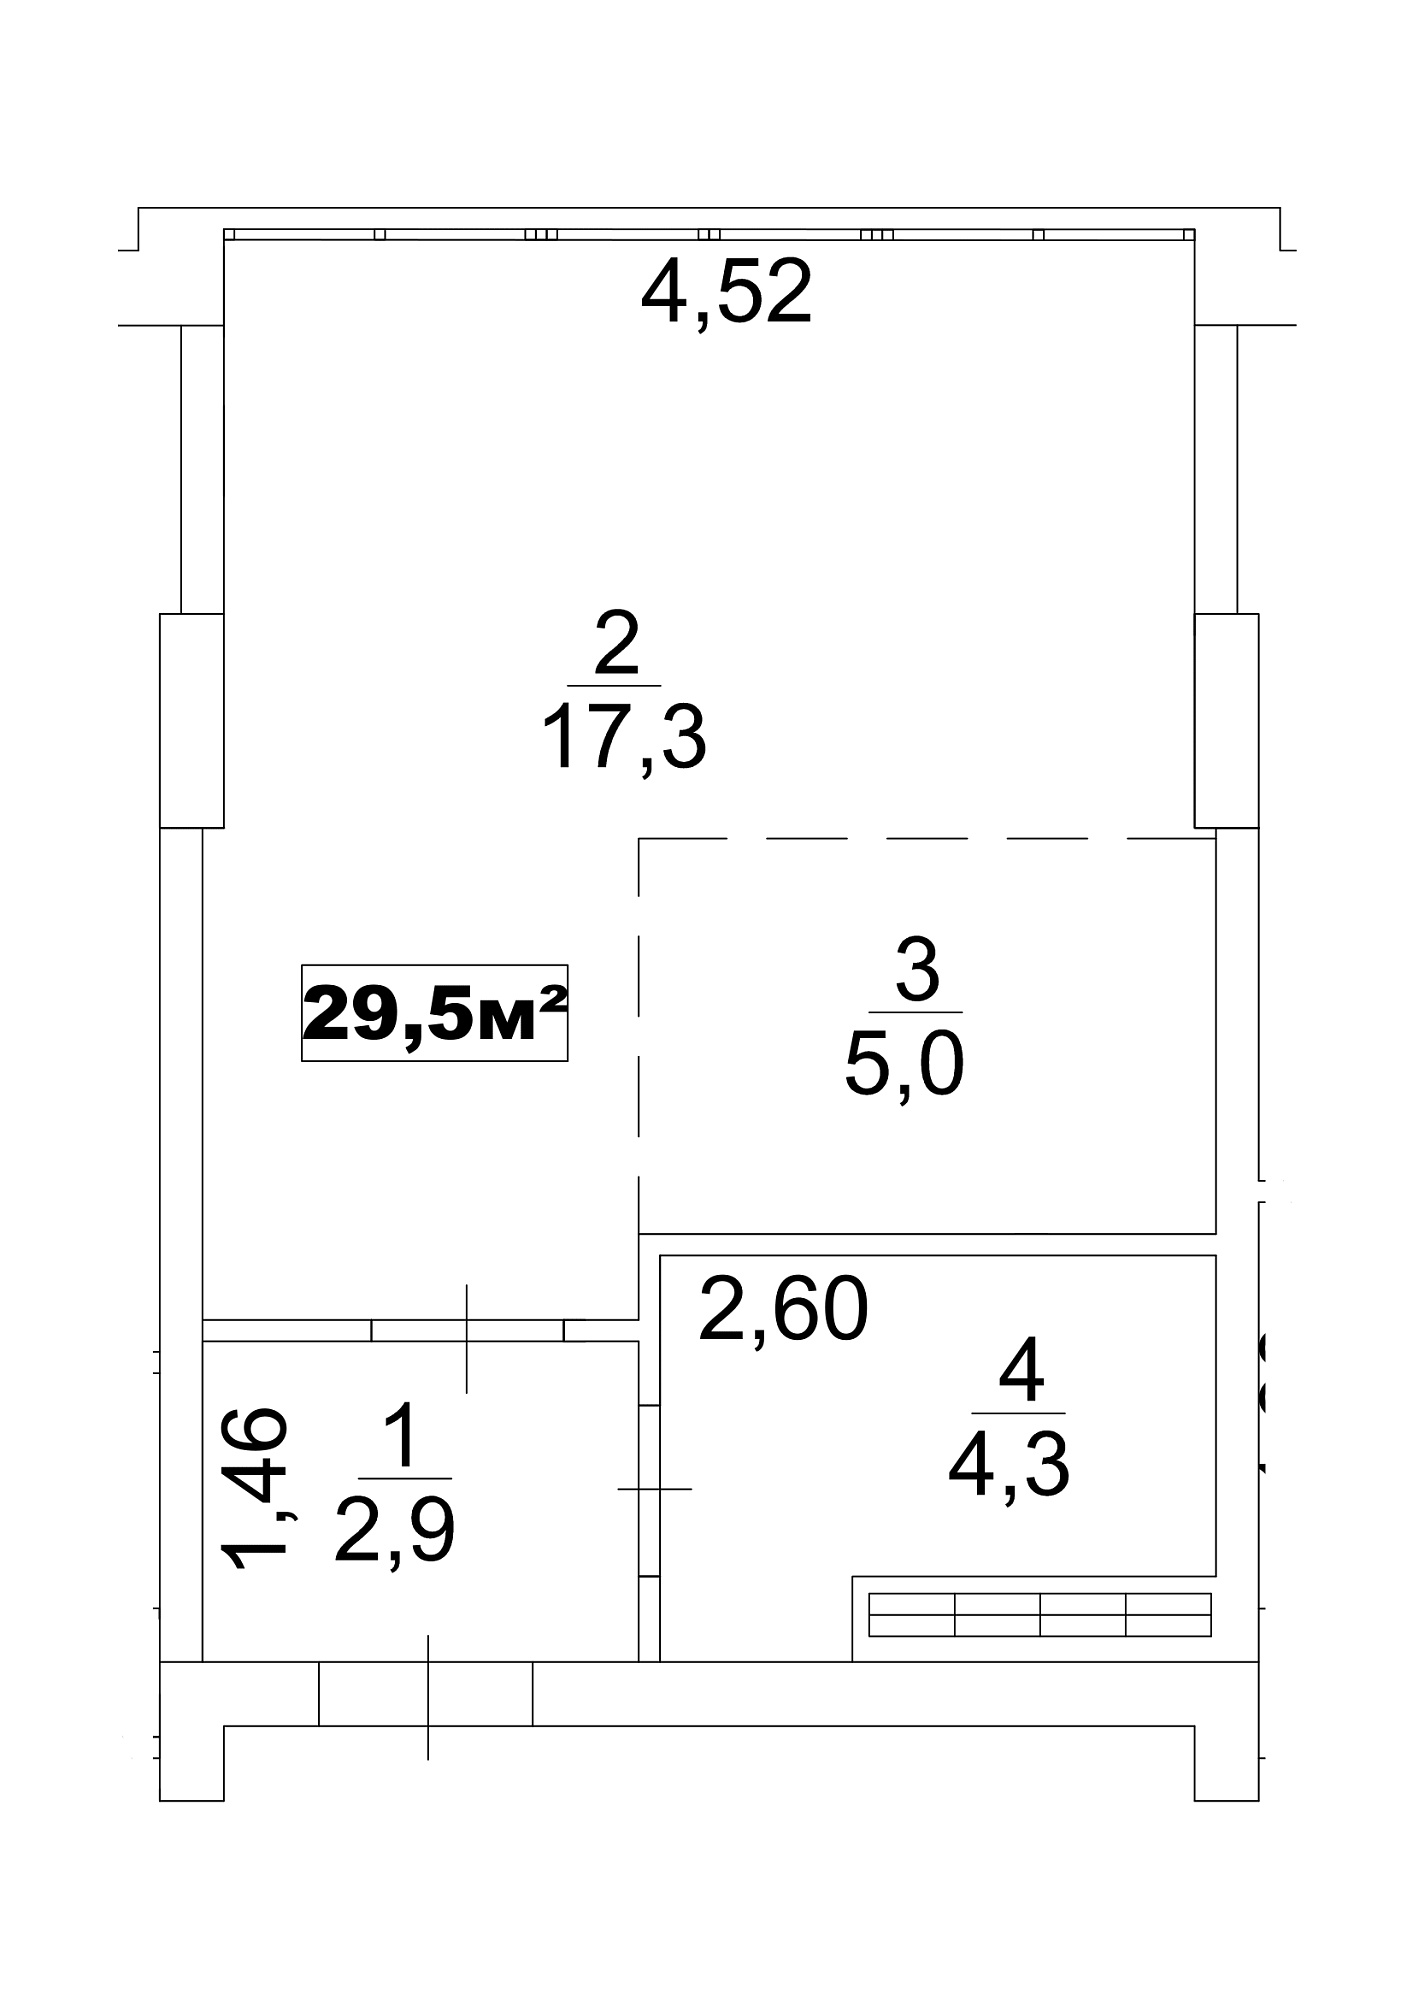 Planning Smart flats area 29.5m2, AB-13-01/0003б.